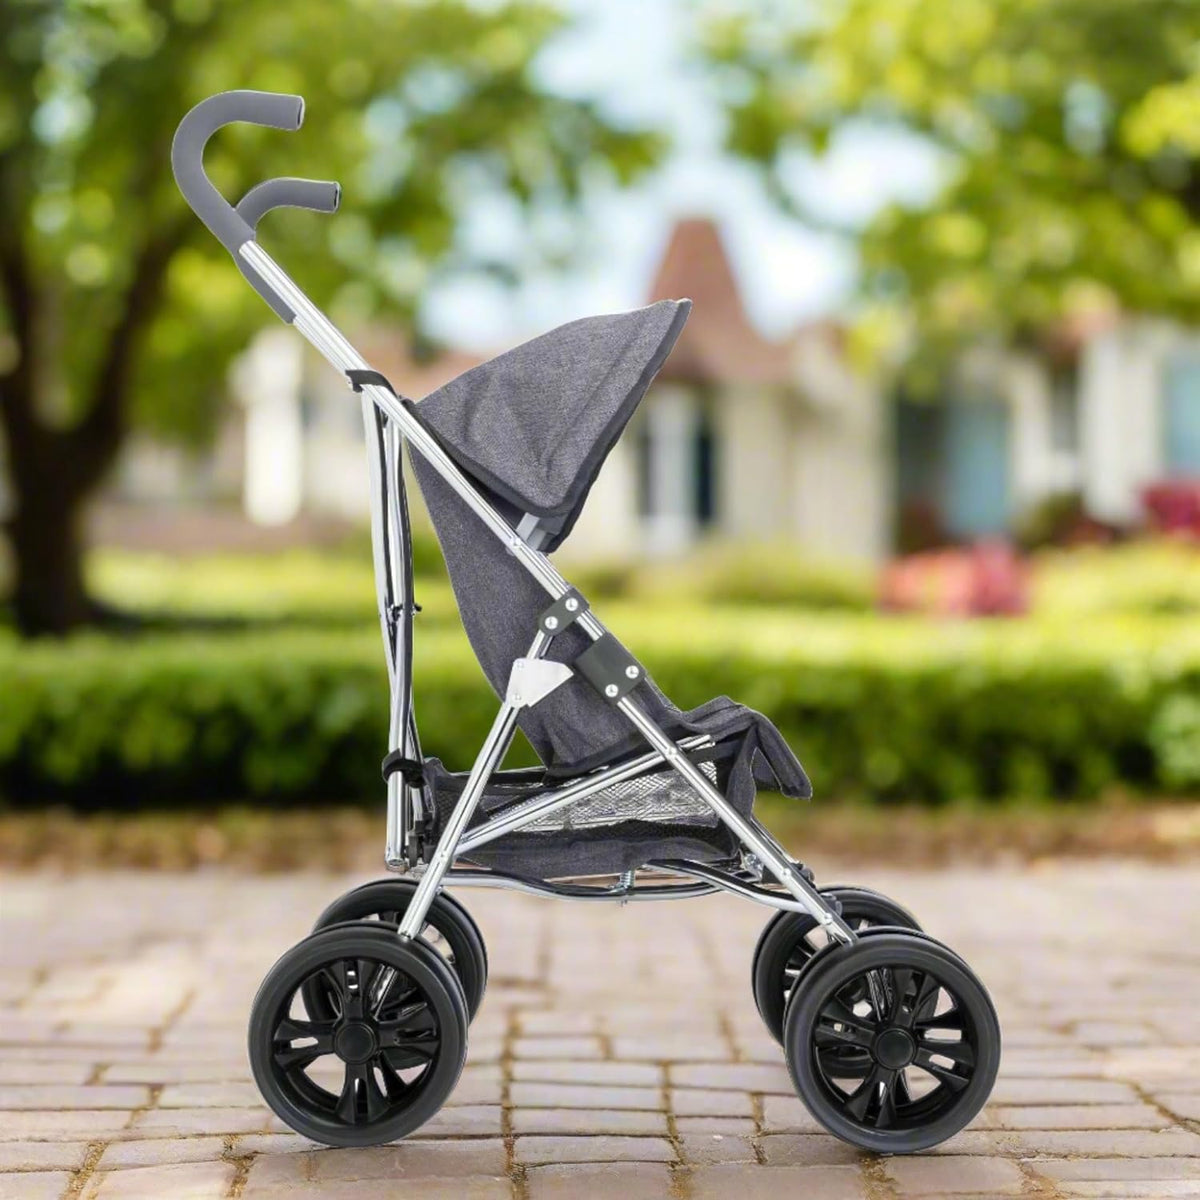 Celuna Premium Junior Dolls Stroller - lightweight and durable doll stroller with a sleek design, perfect for imaginative play